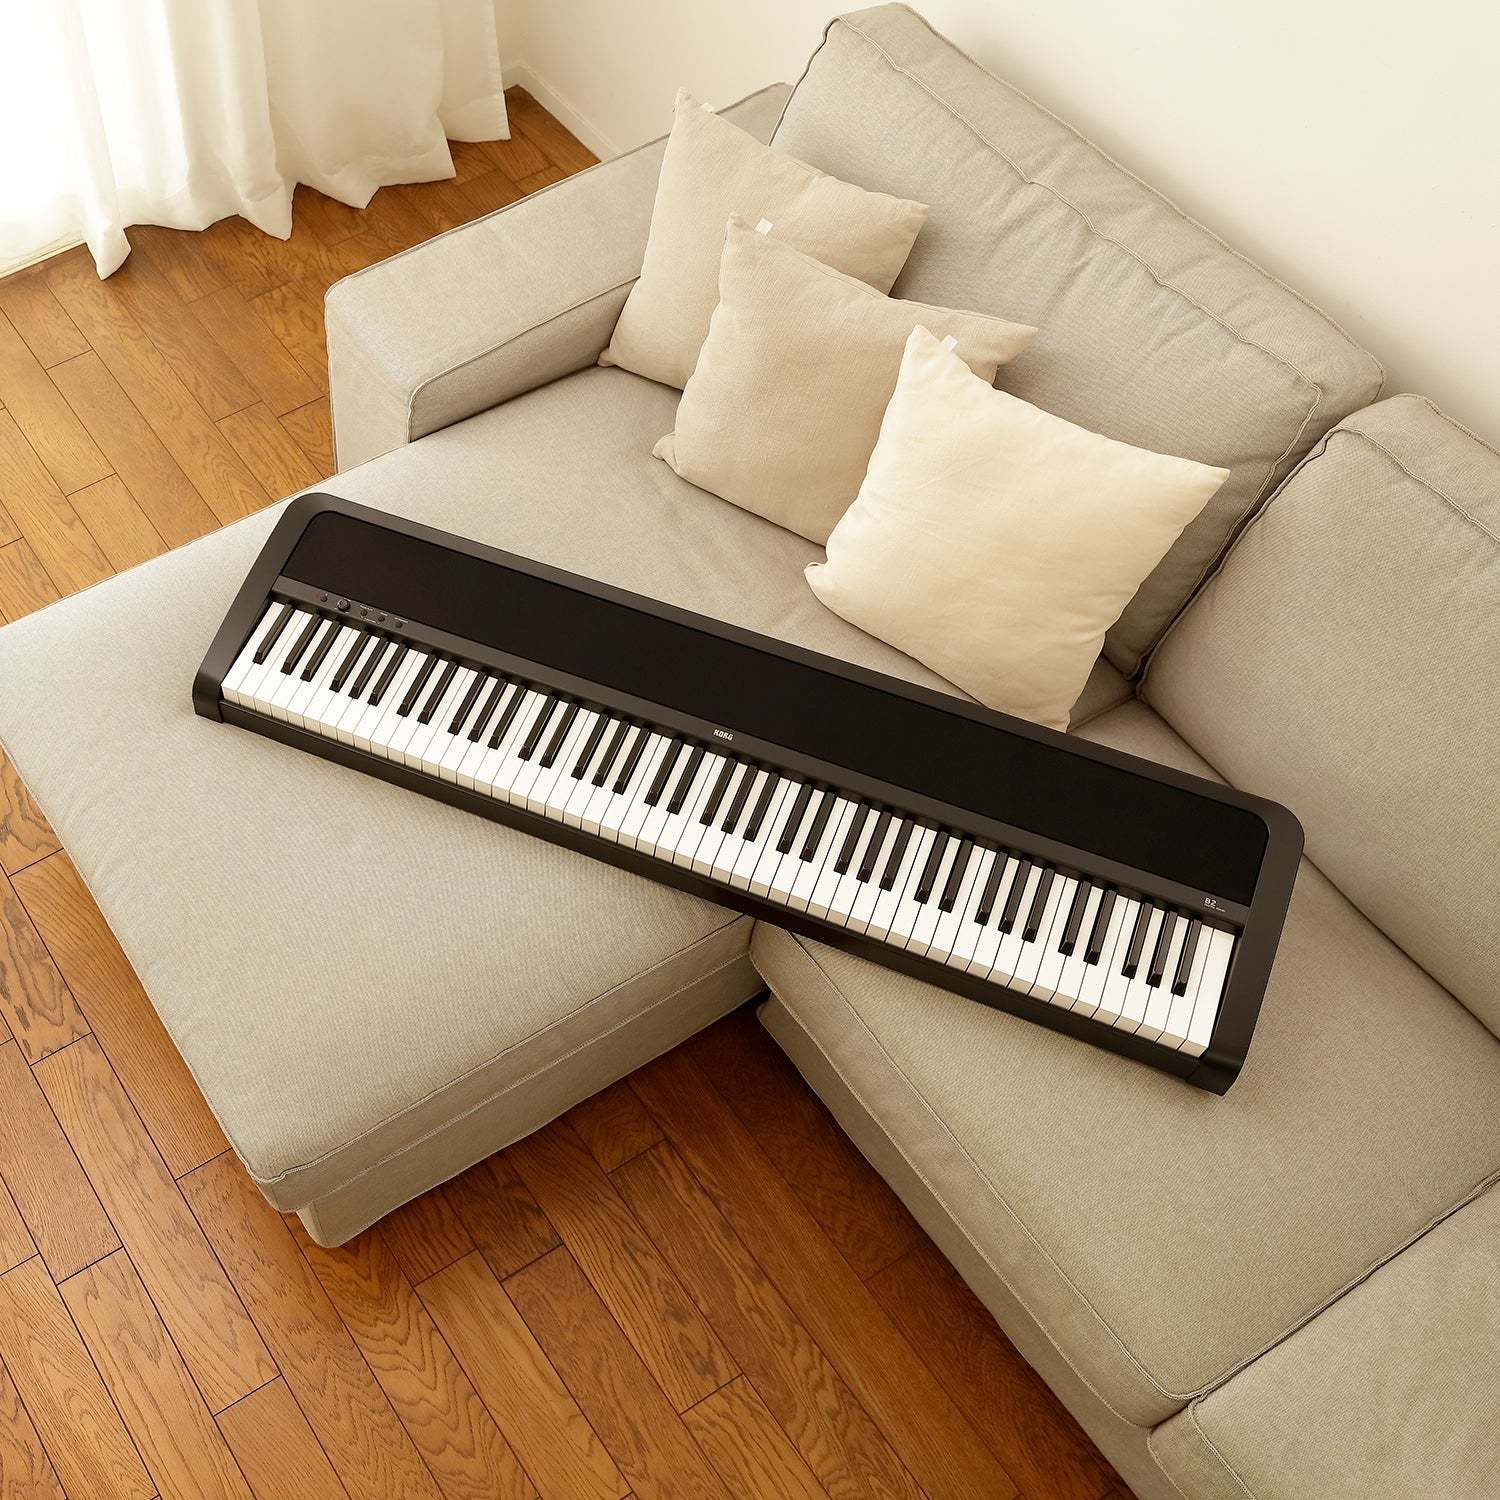 B2 Digital Piano - Black KORG USA Official Store